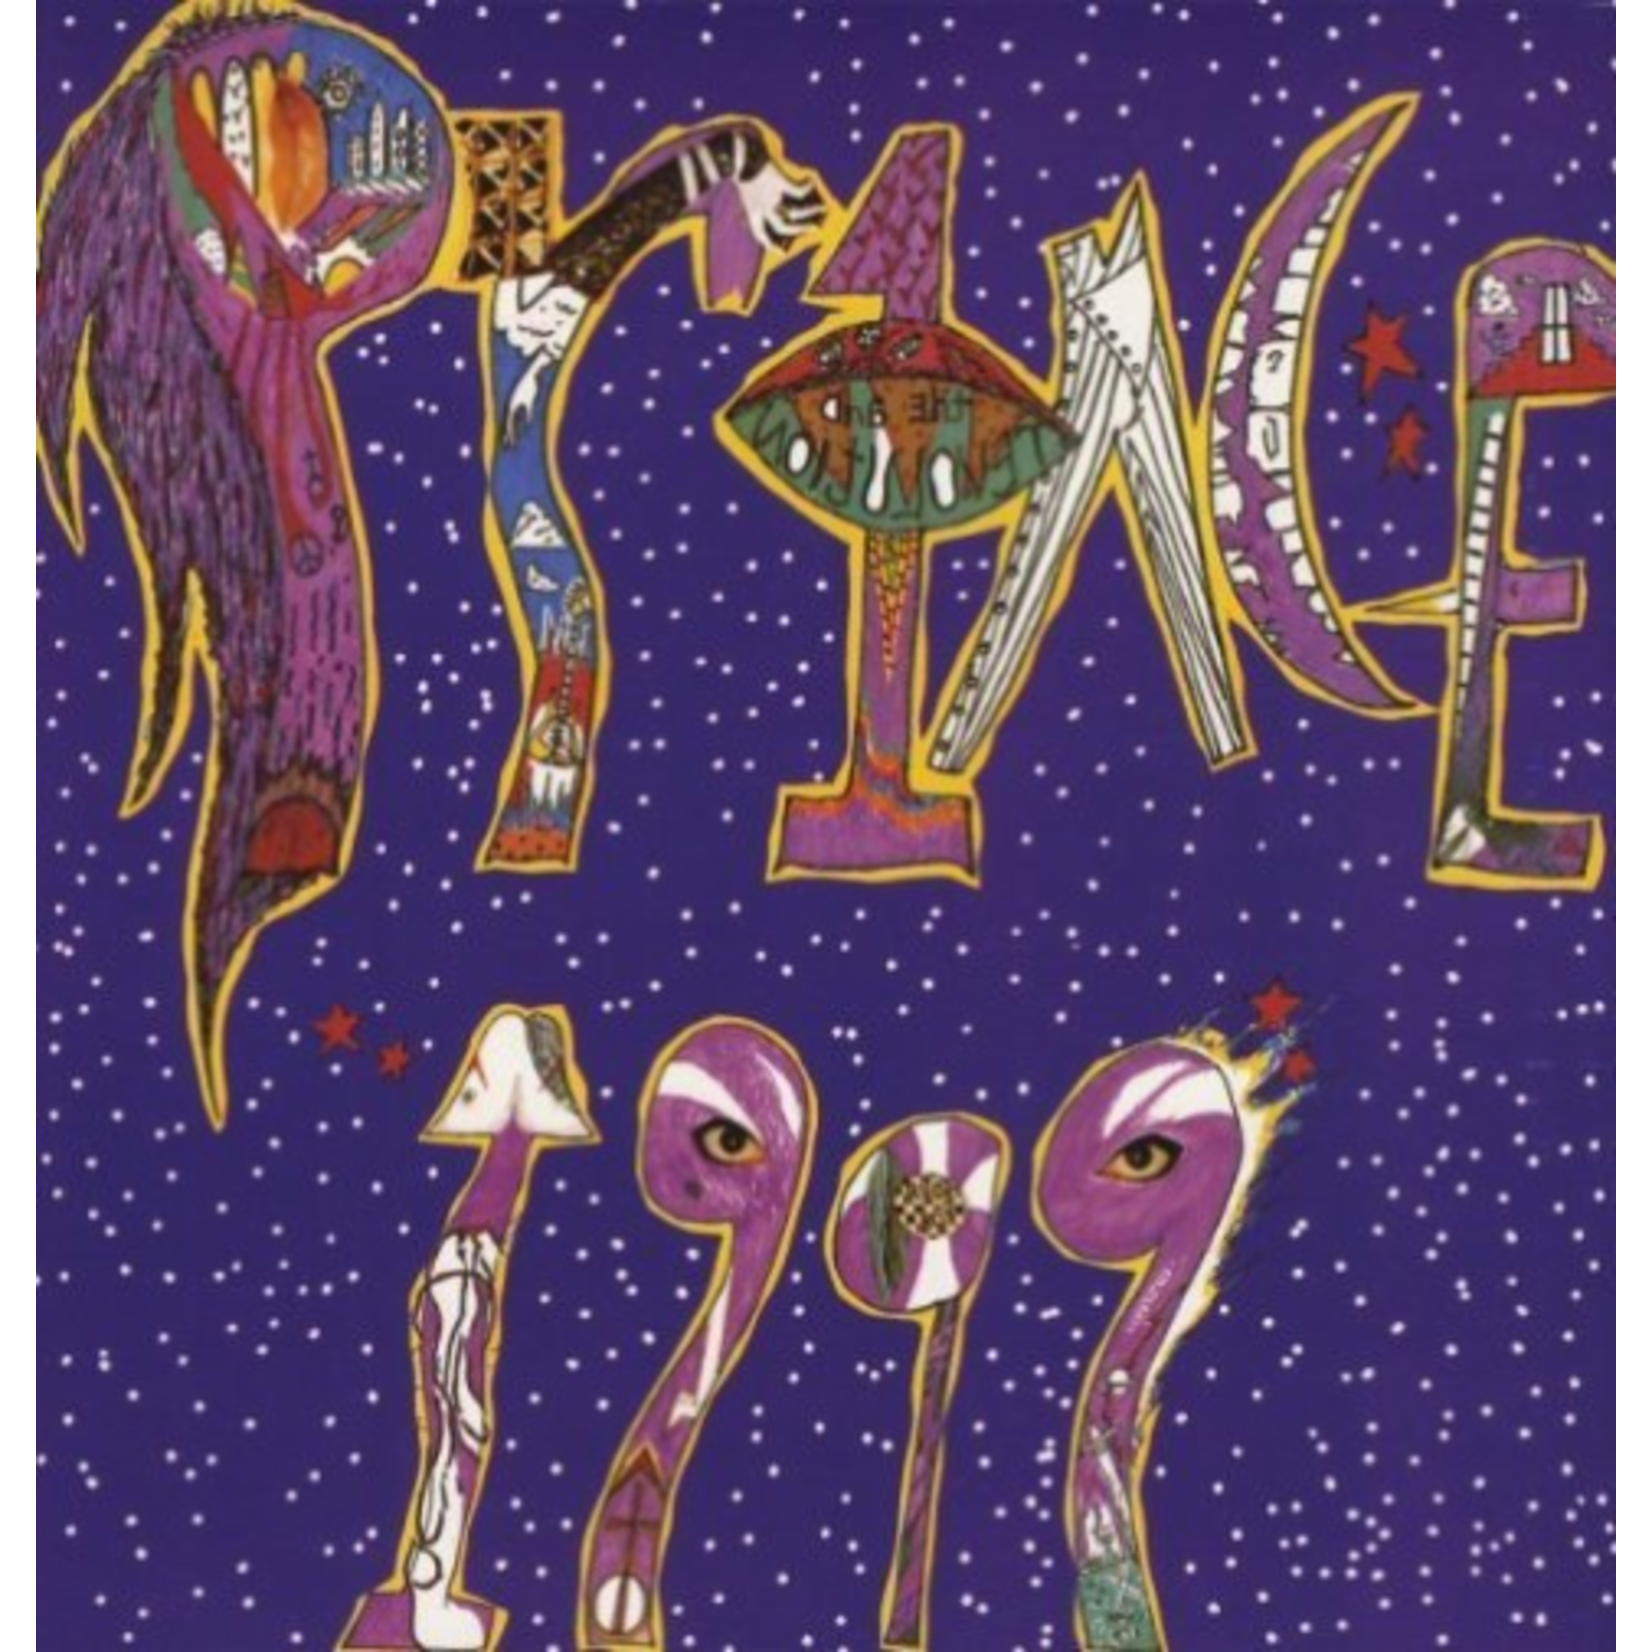 PRINCE 1999 (2LP)